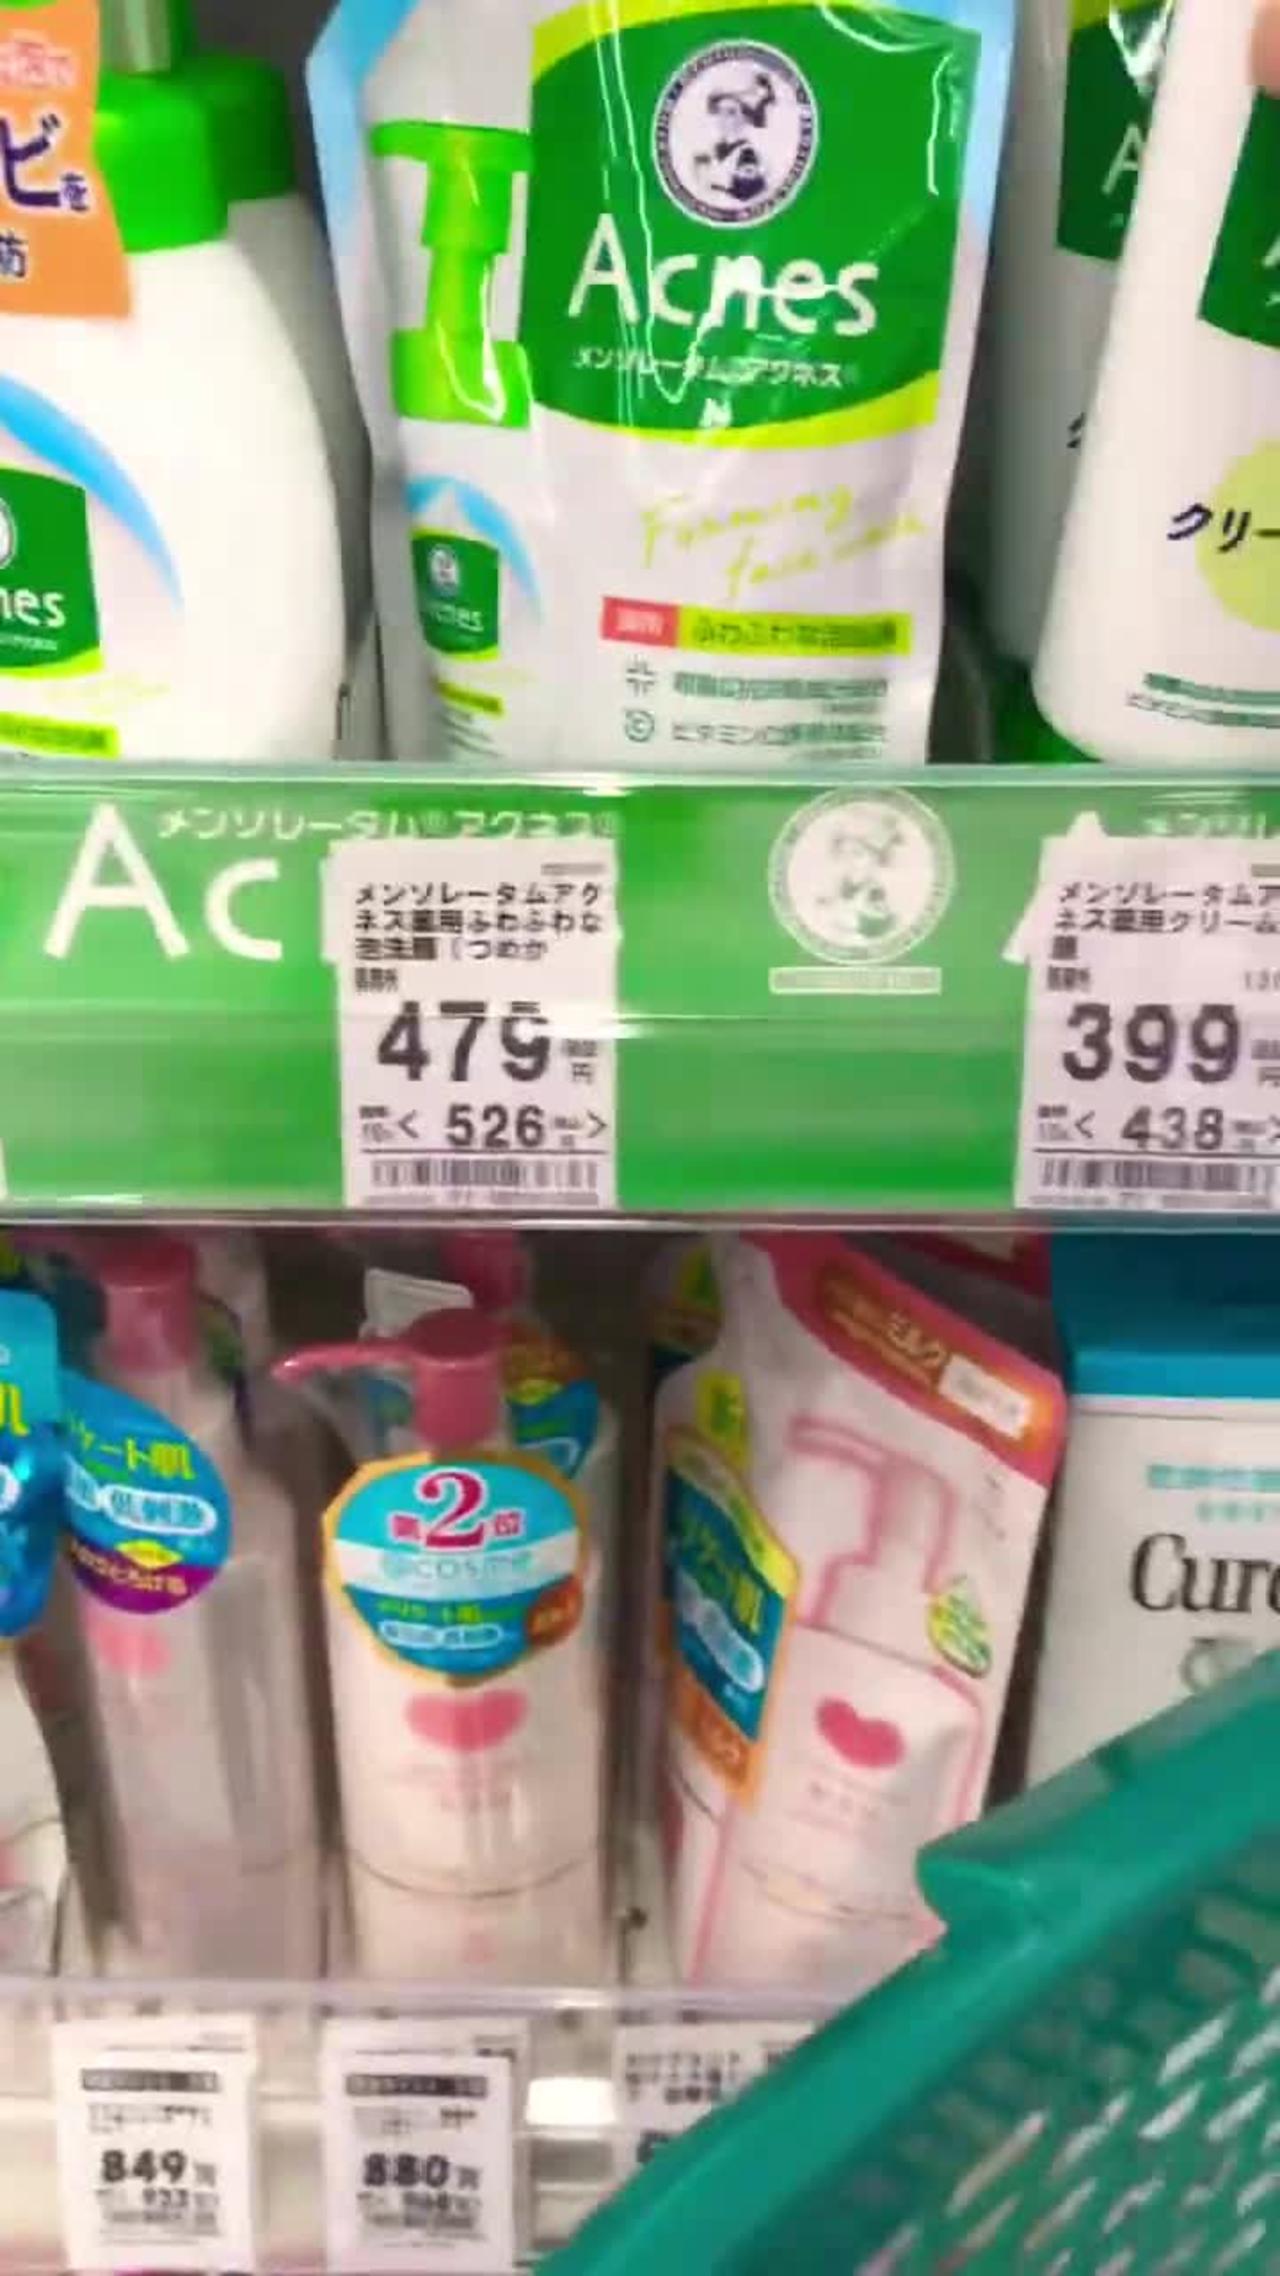 Best Japanese cleanser for acne prone skin